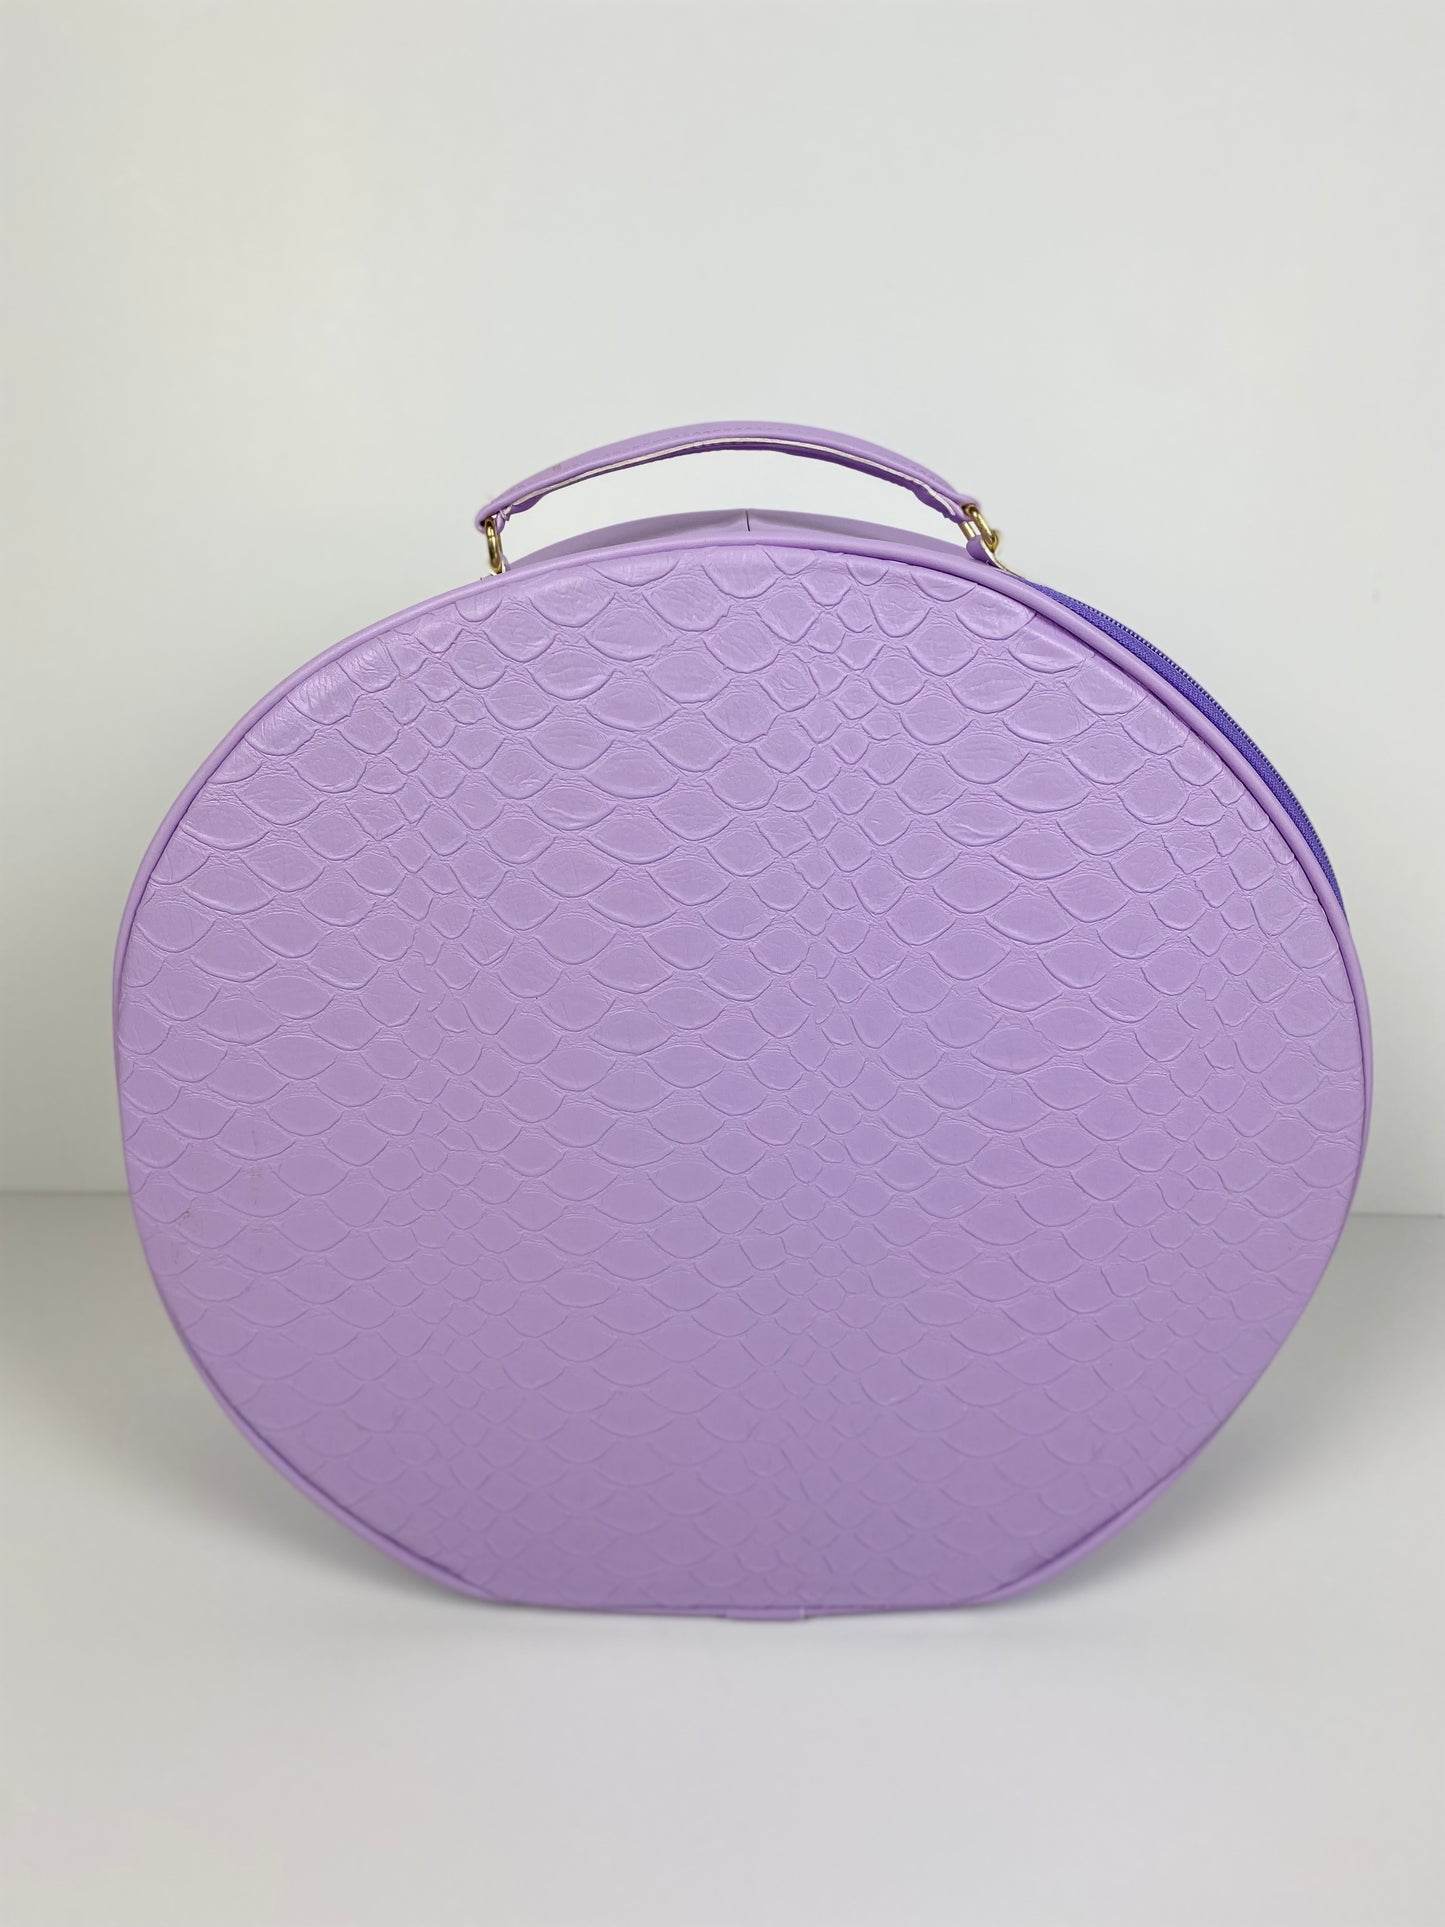 The Traveler Hat Box - Pastel Lavender